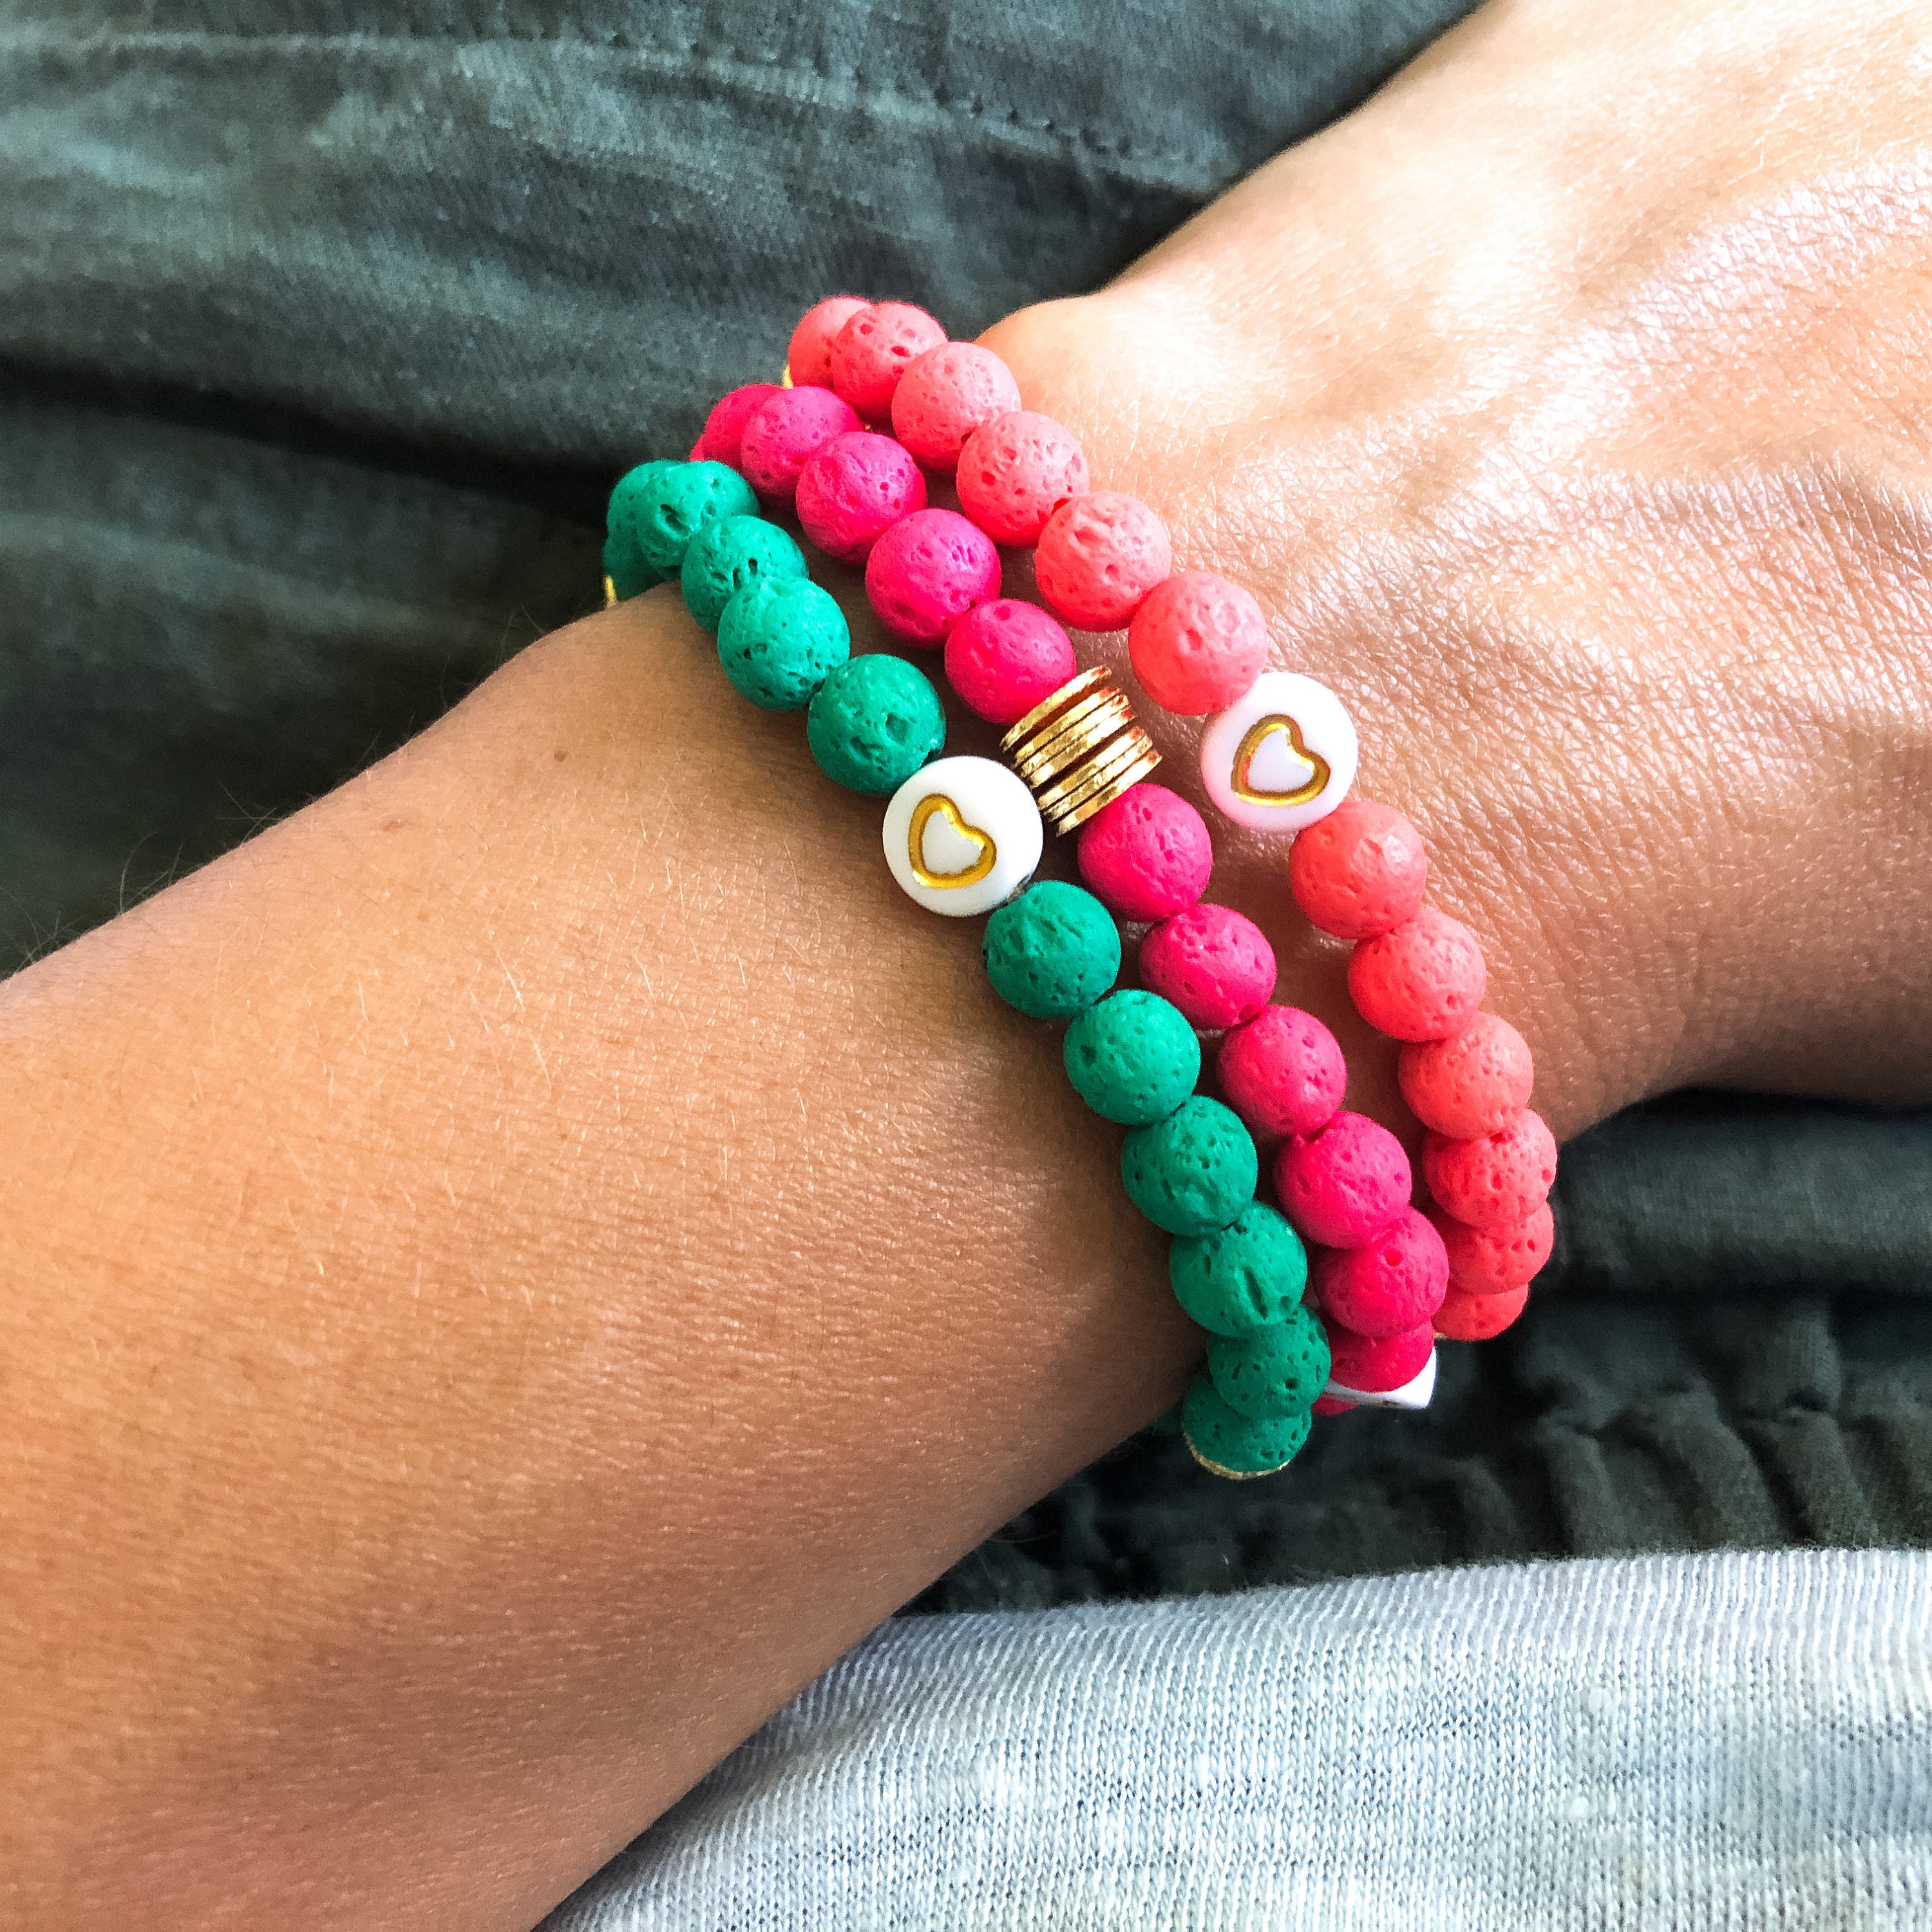 Kids Bracelet Making Kit Personalized Beaded Jewelry DIY Girls